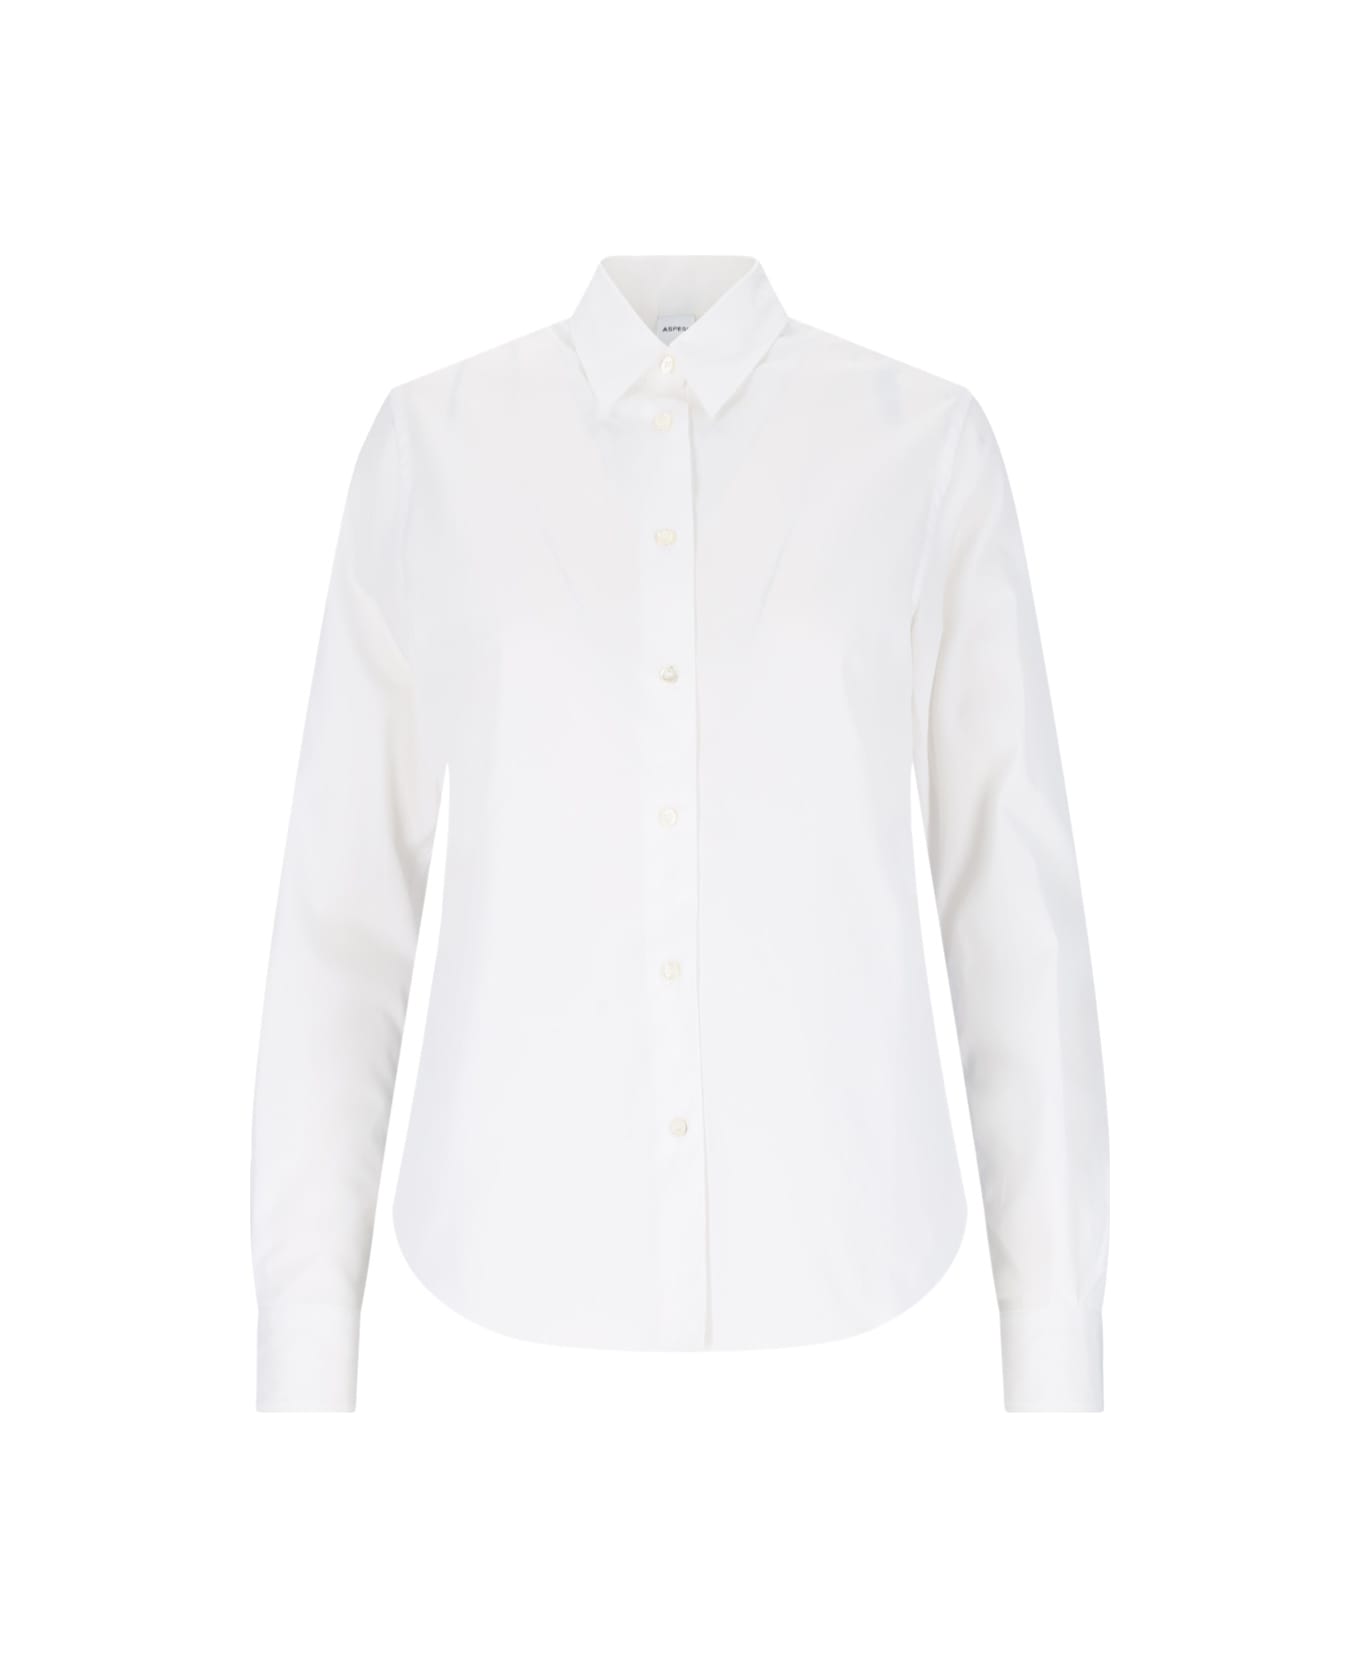 Aspesi Basic Shirt - White シャツ